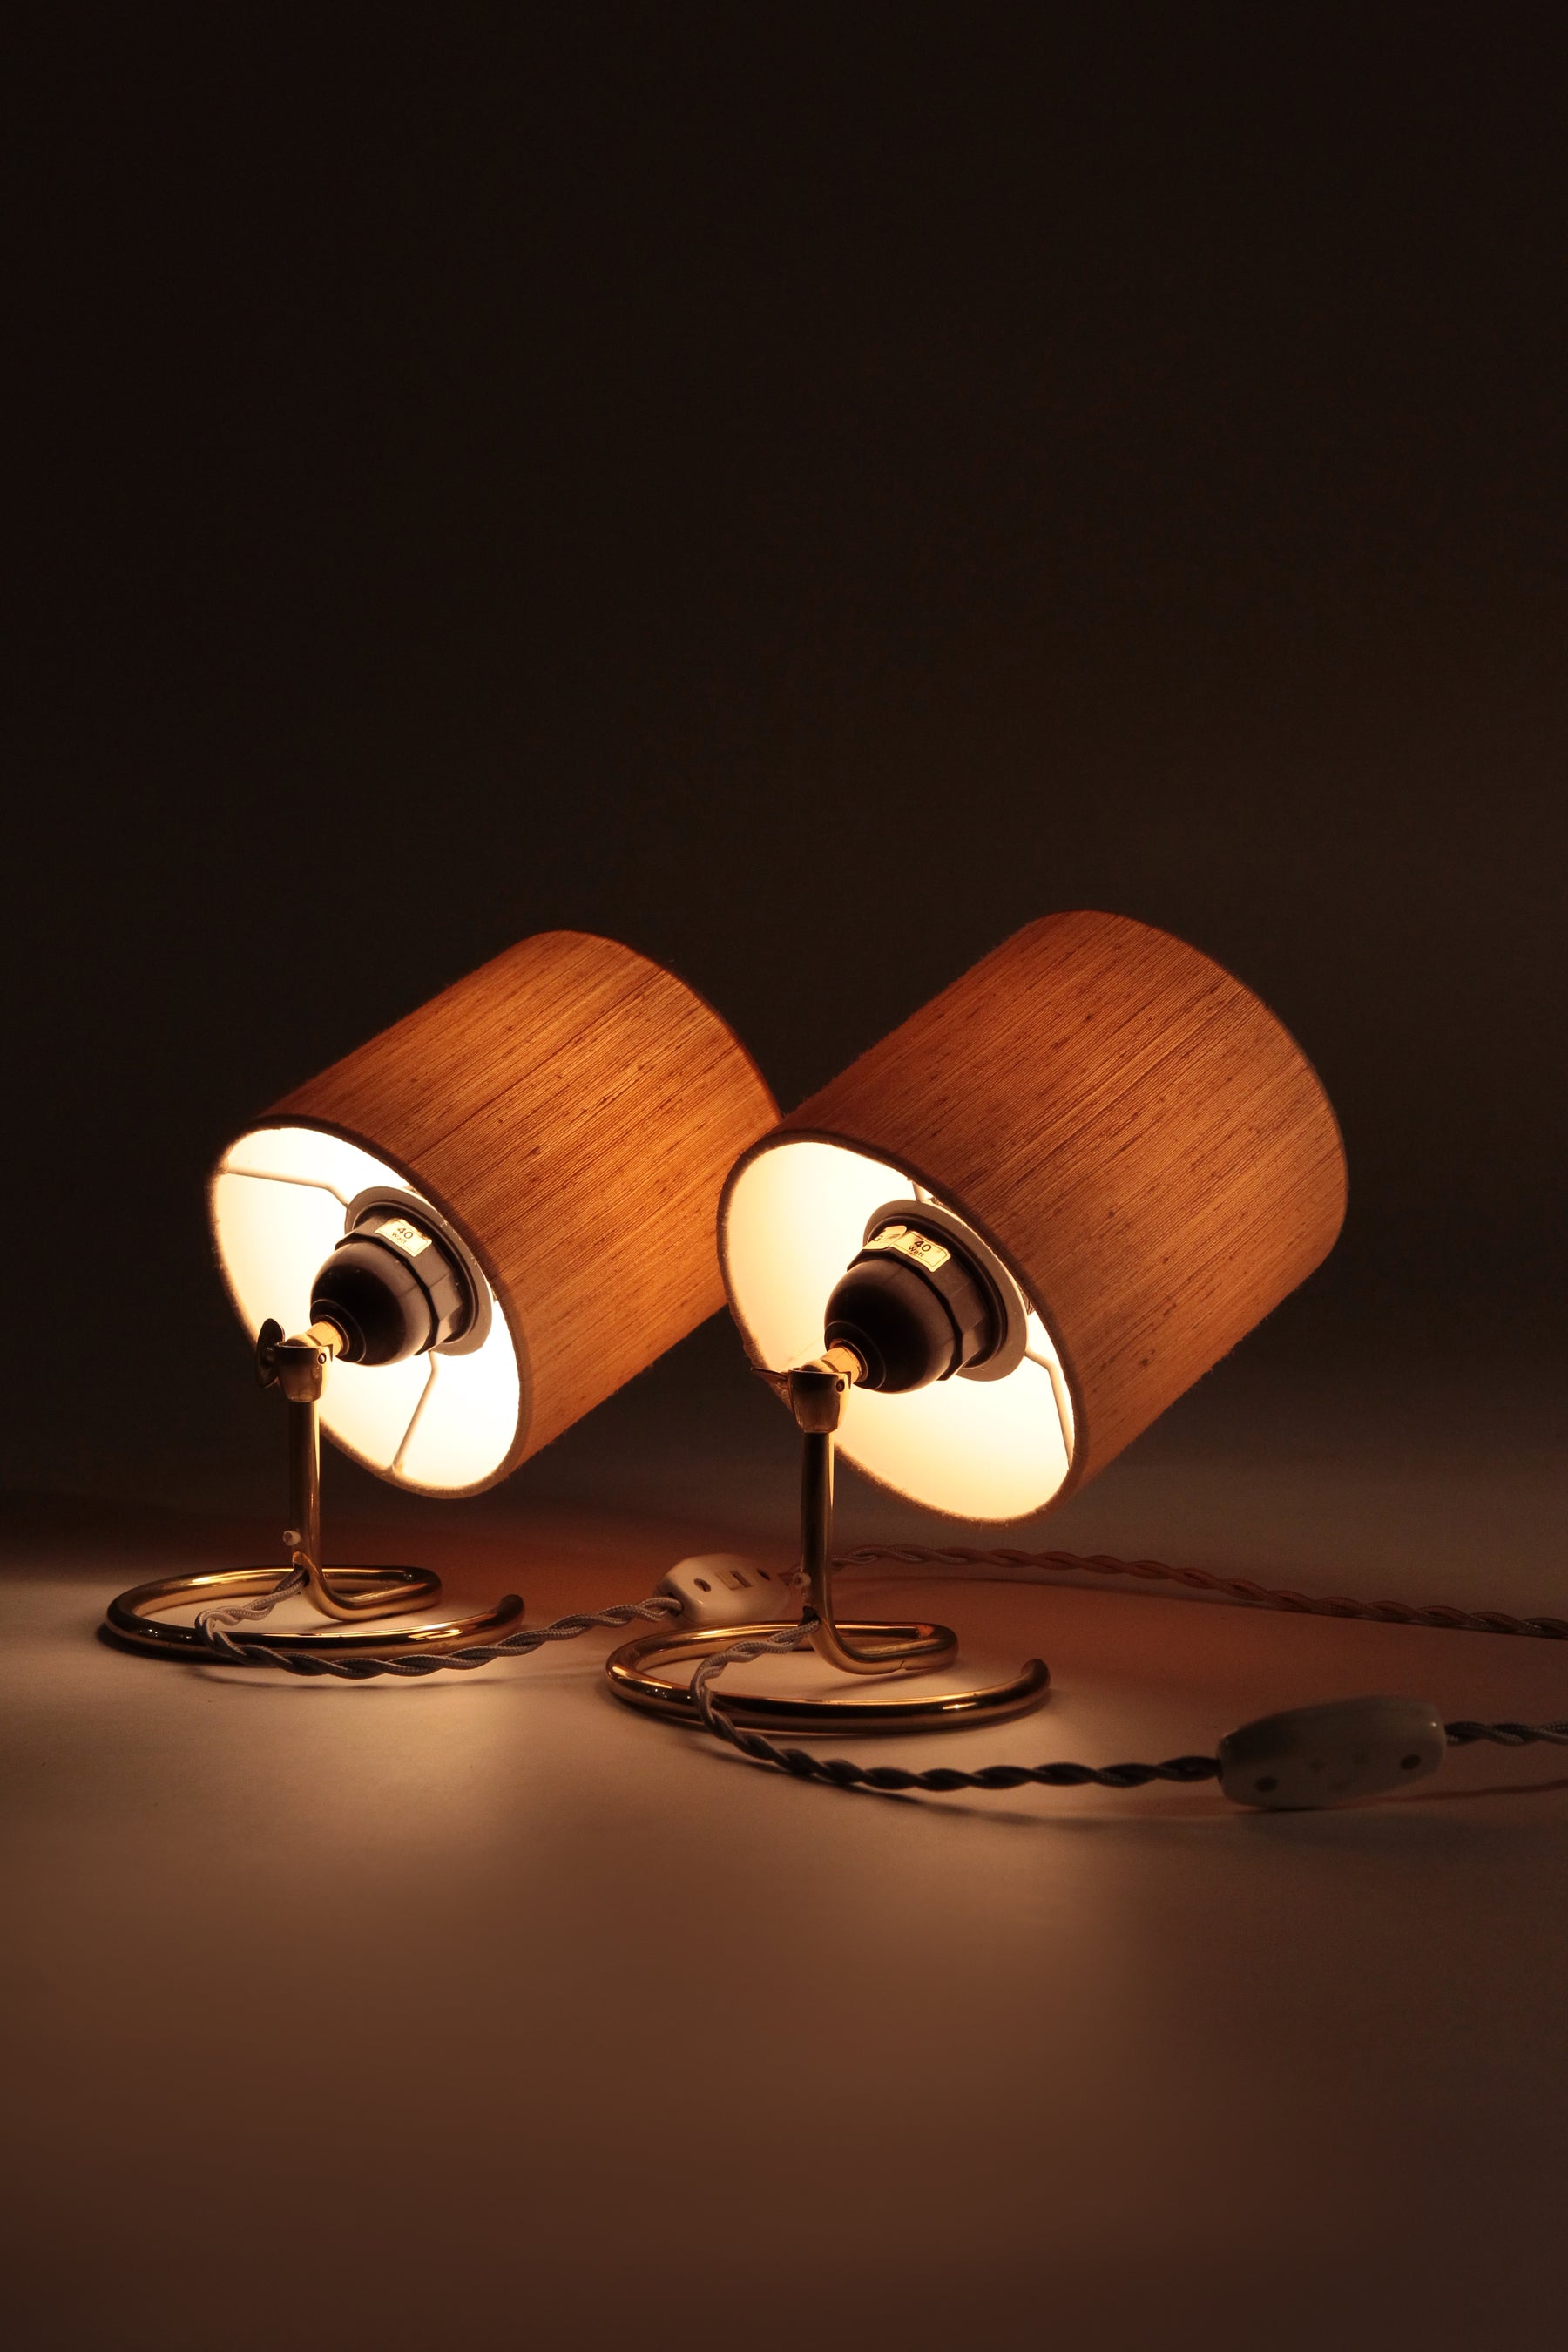 Pair of Swiss Mégal lamps